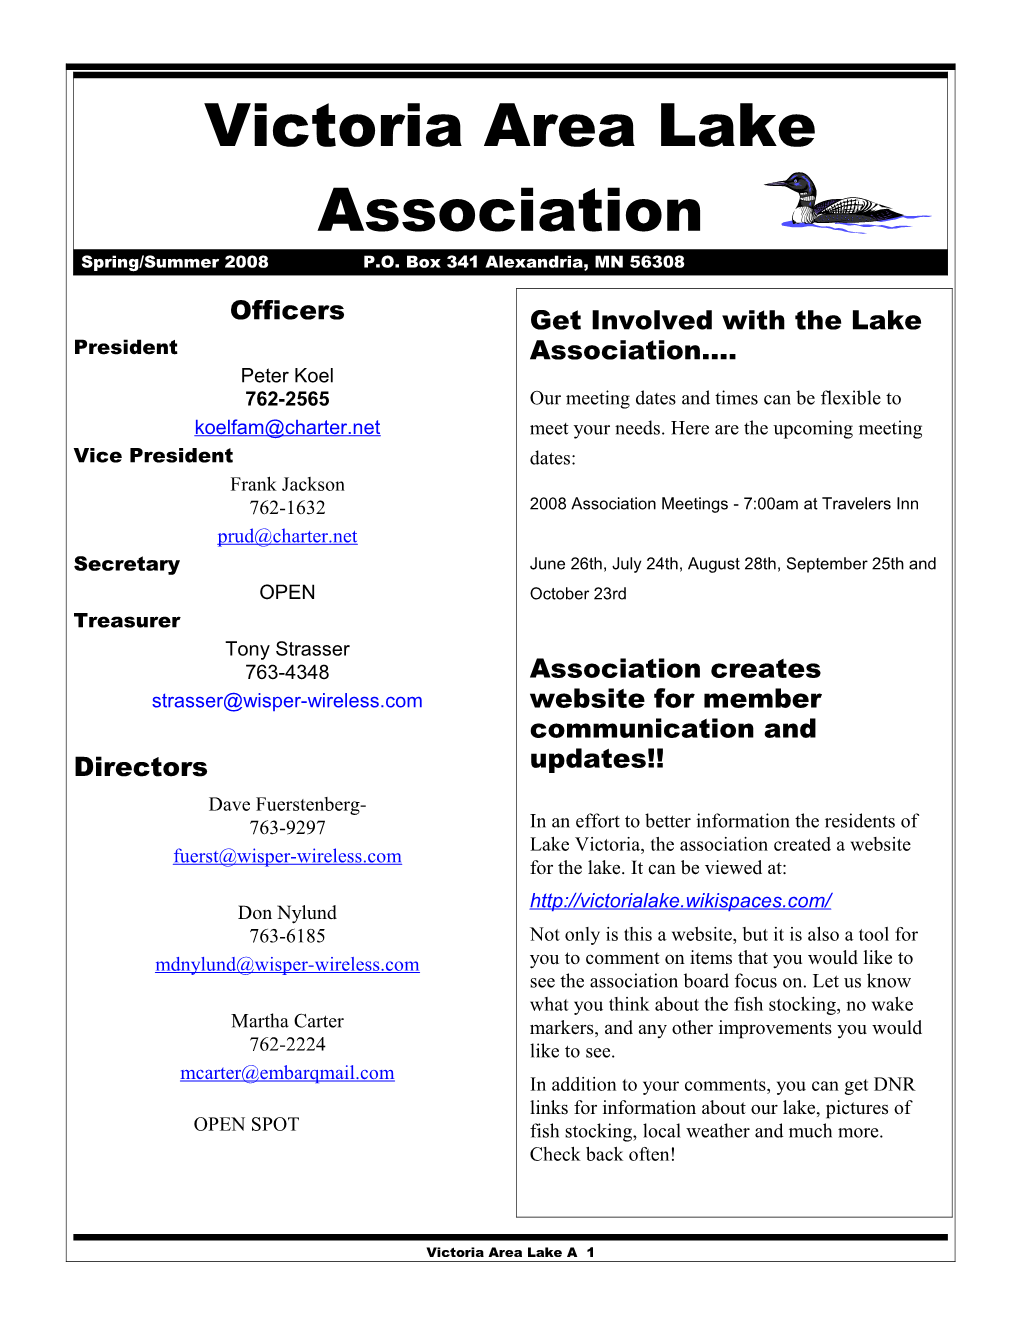 Victoria Area Lake Association